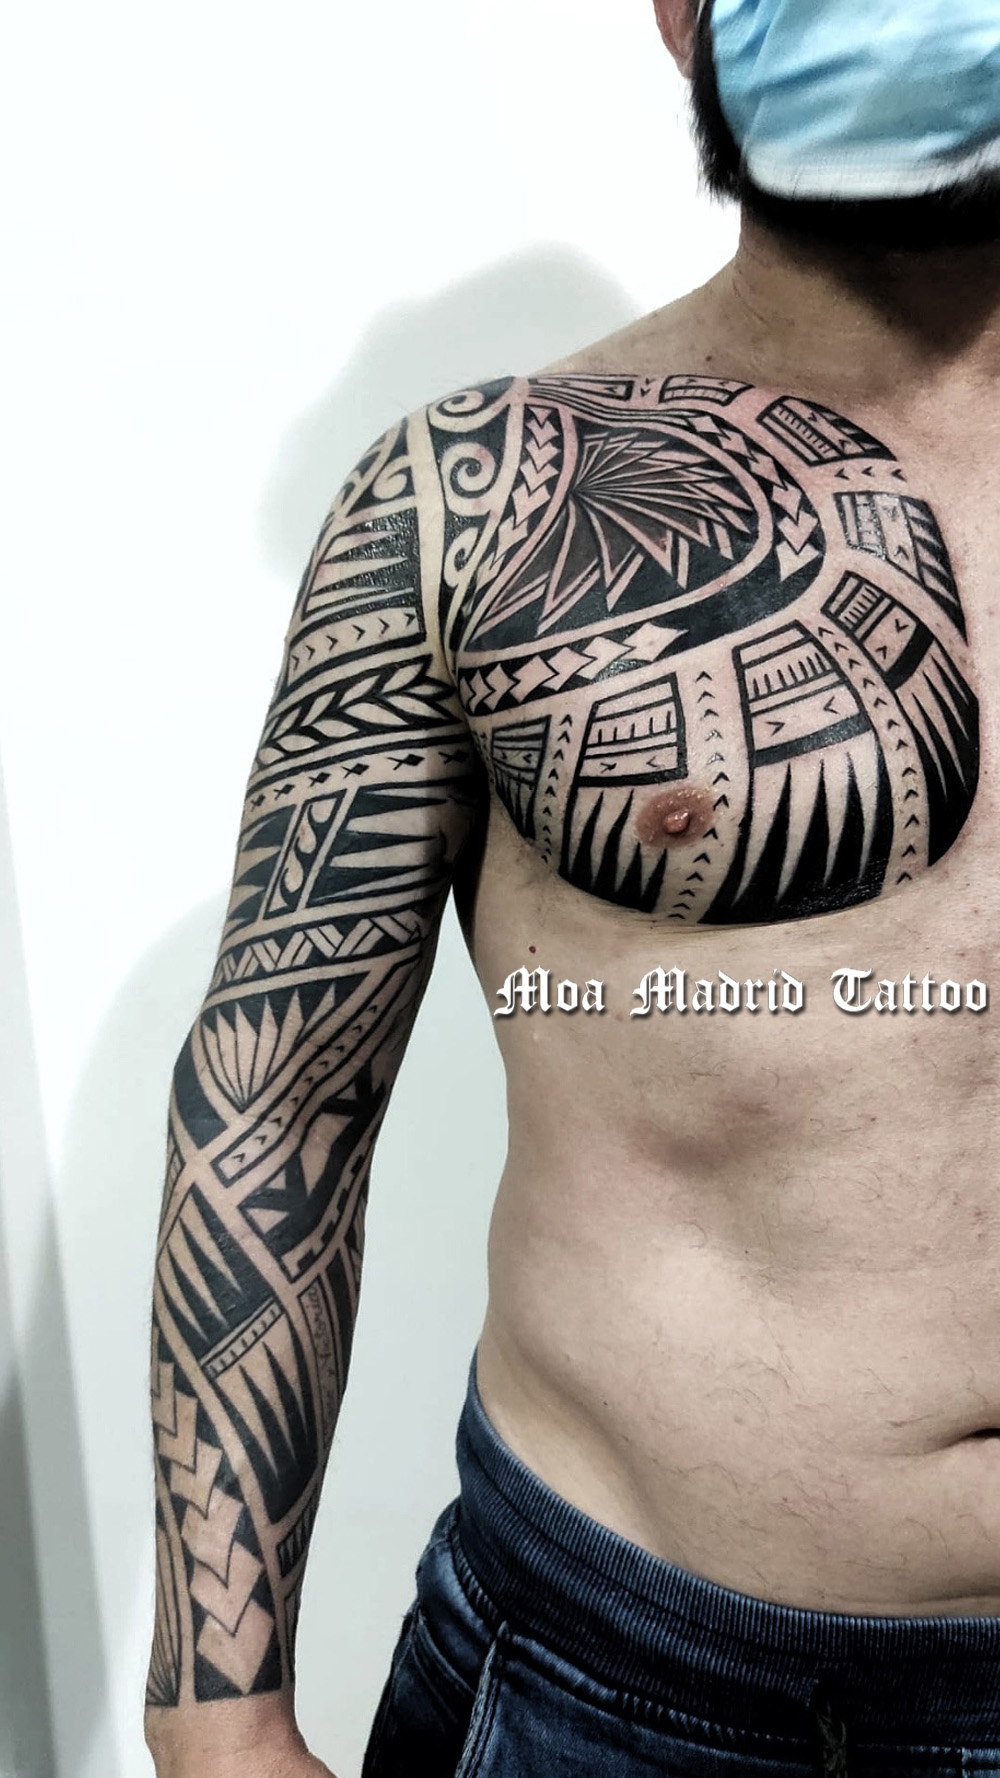 Presume de tatuaje maorí: Moa Madrid Tattoo, WhatsApp 650 018 319